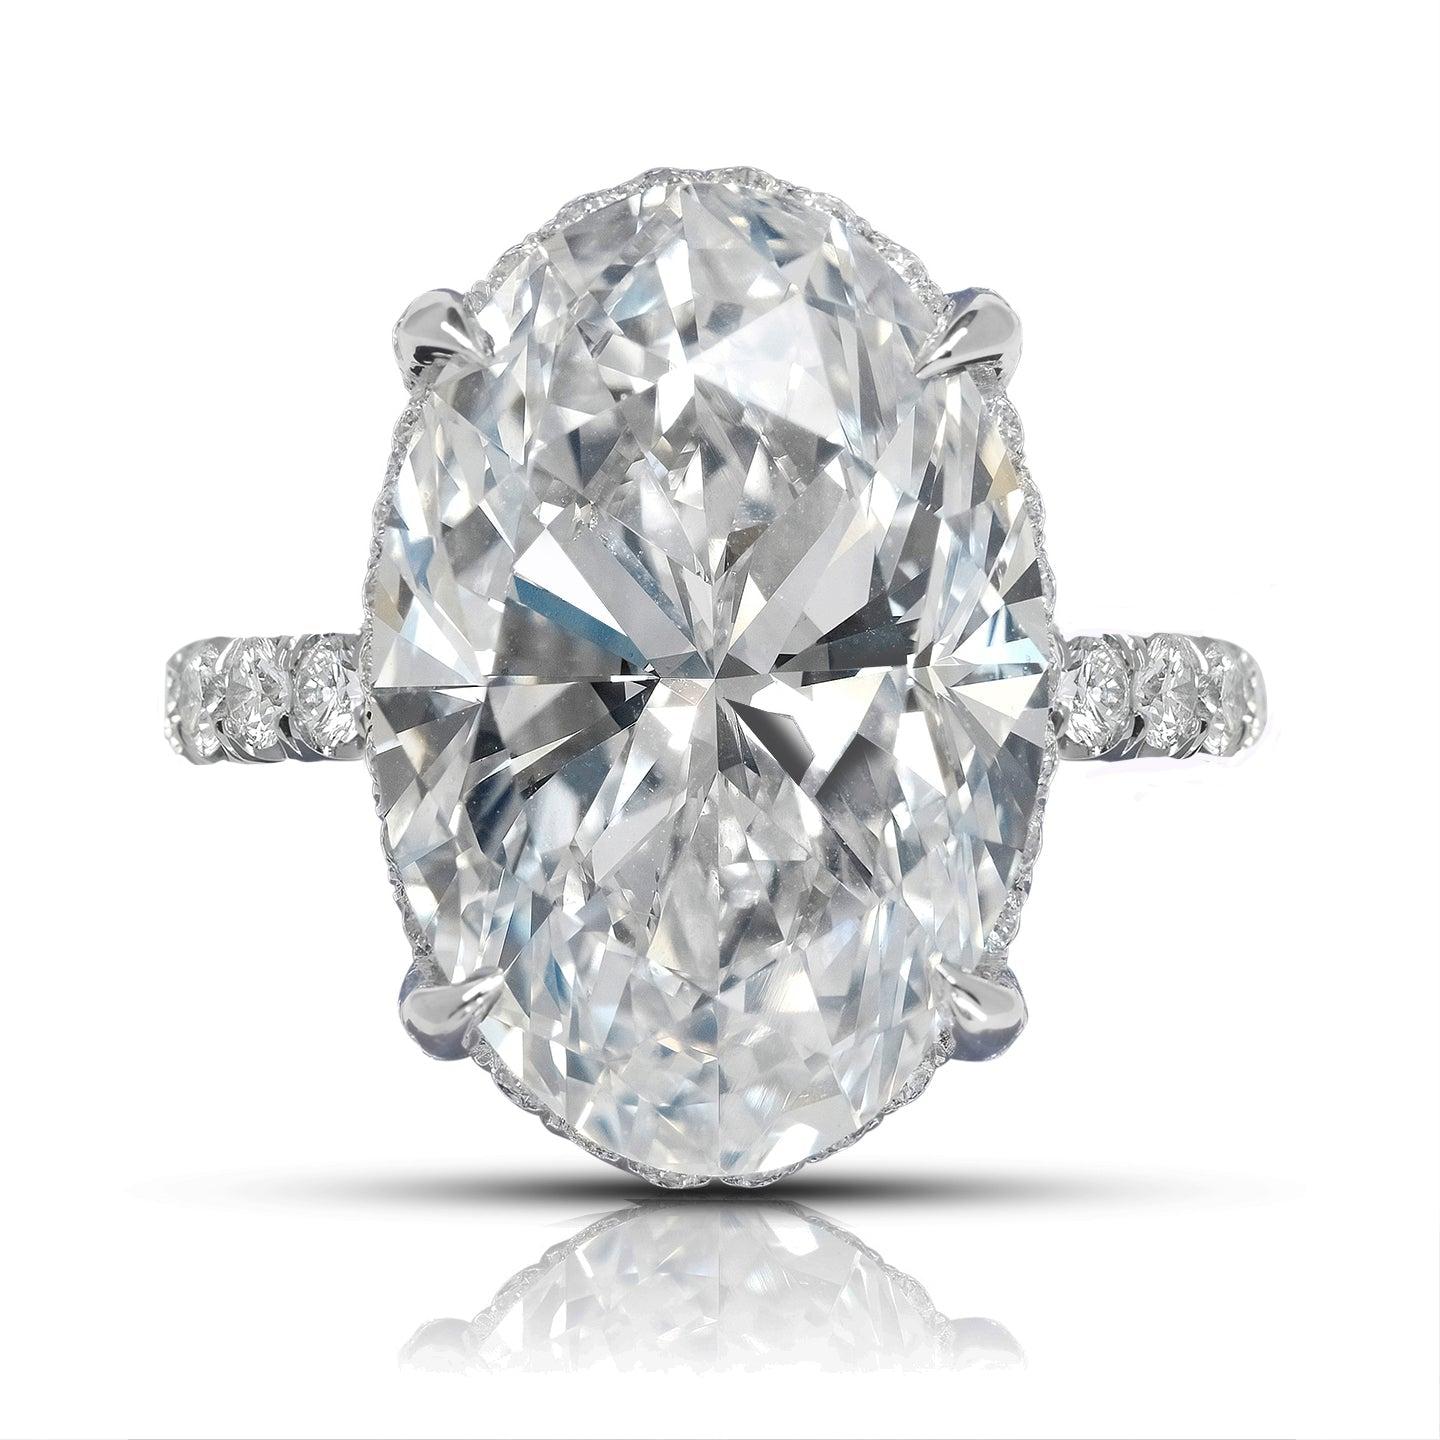 For Sale:  11 Carat Oval Cut Diamond Engagement Ring Platinum GIA Certified D VVS2  2